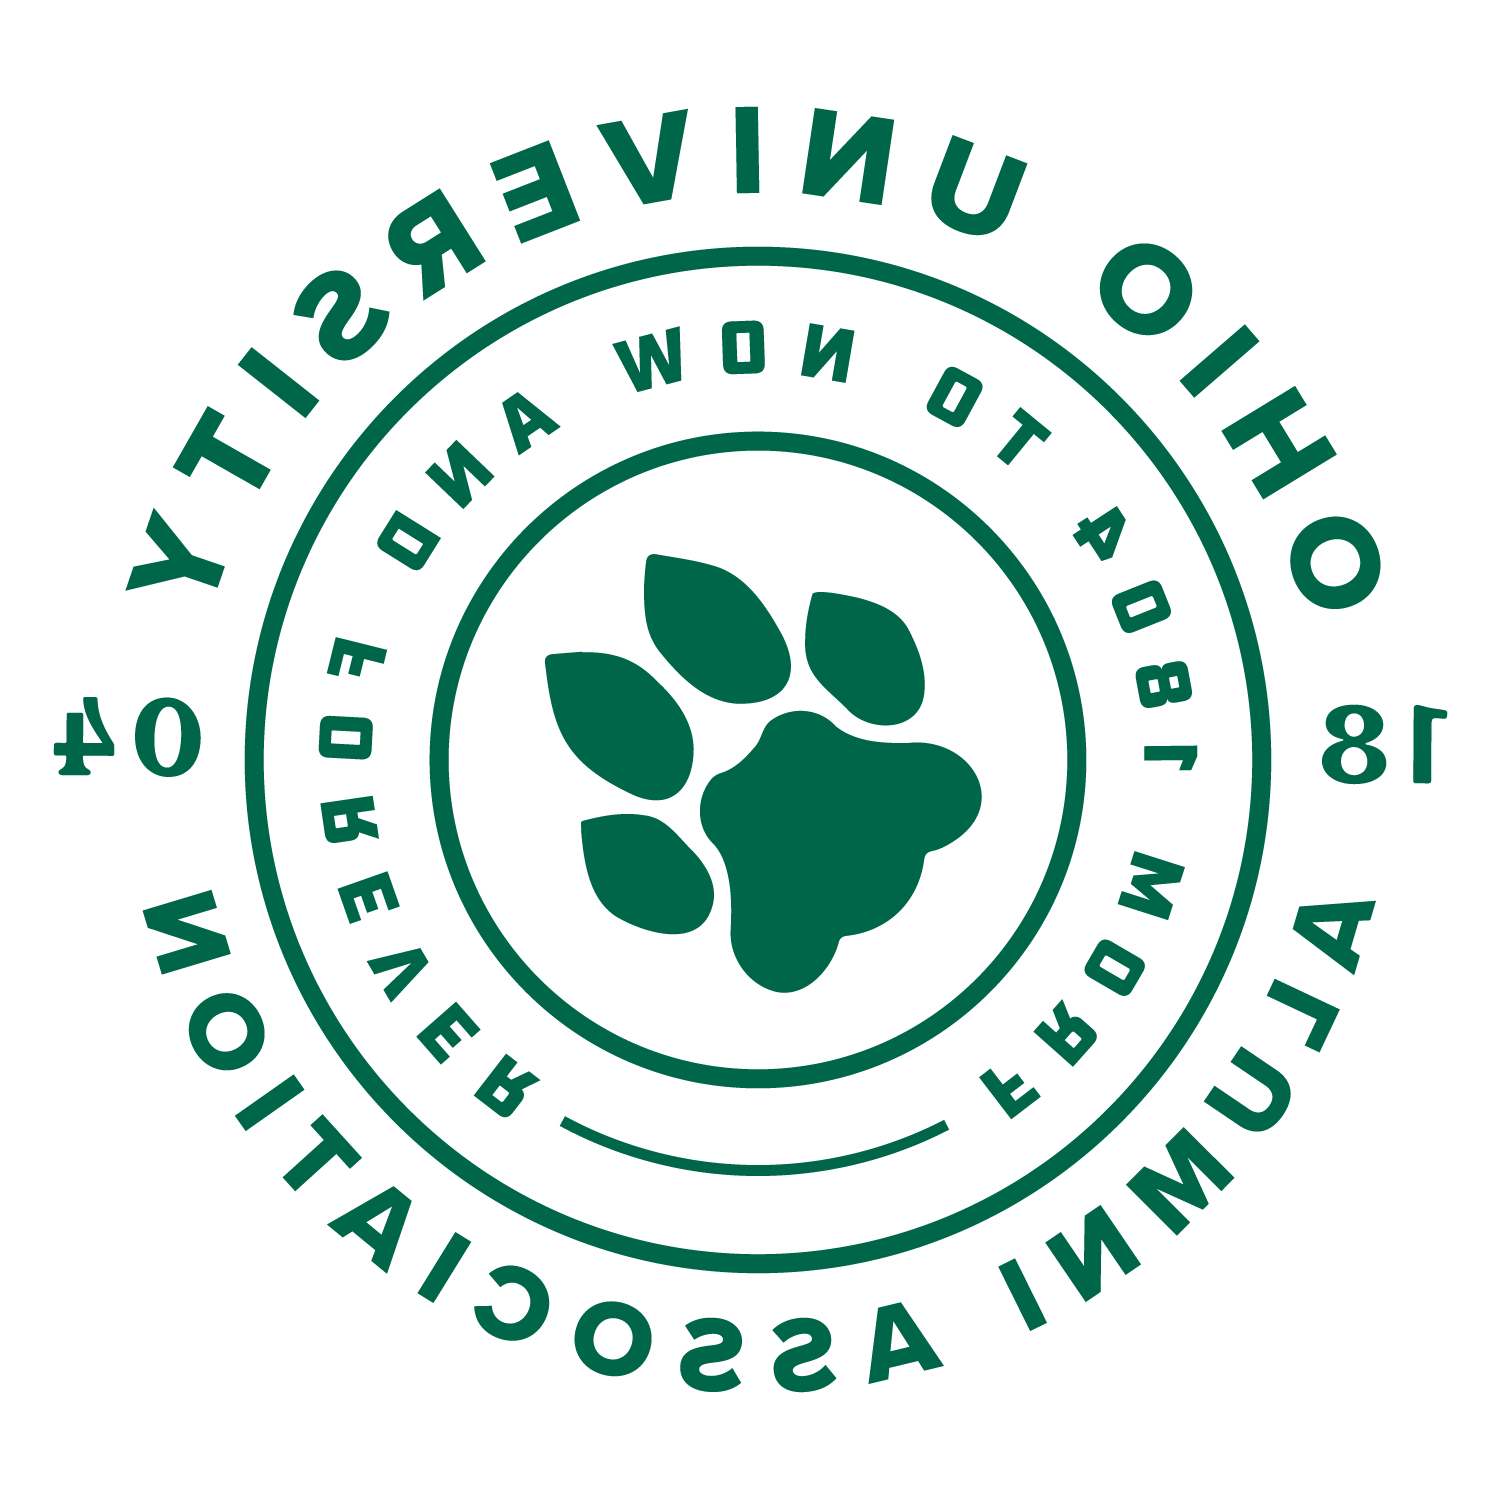 OUAA circle logo with paw print.